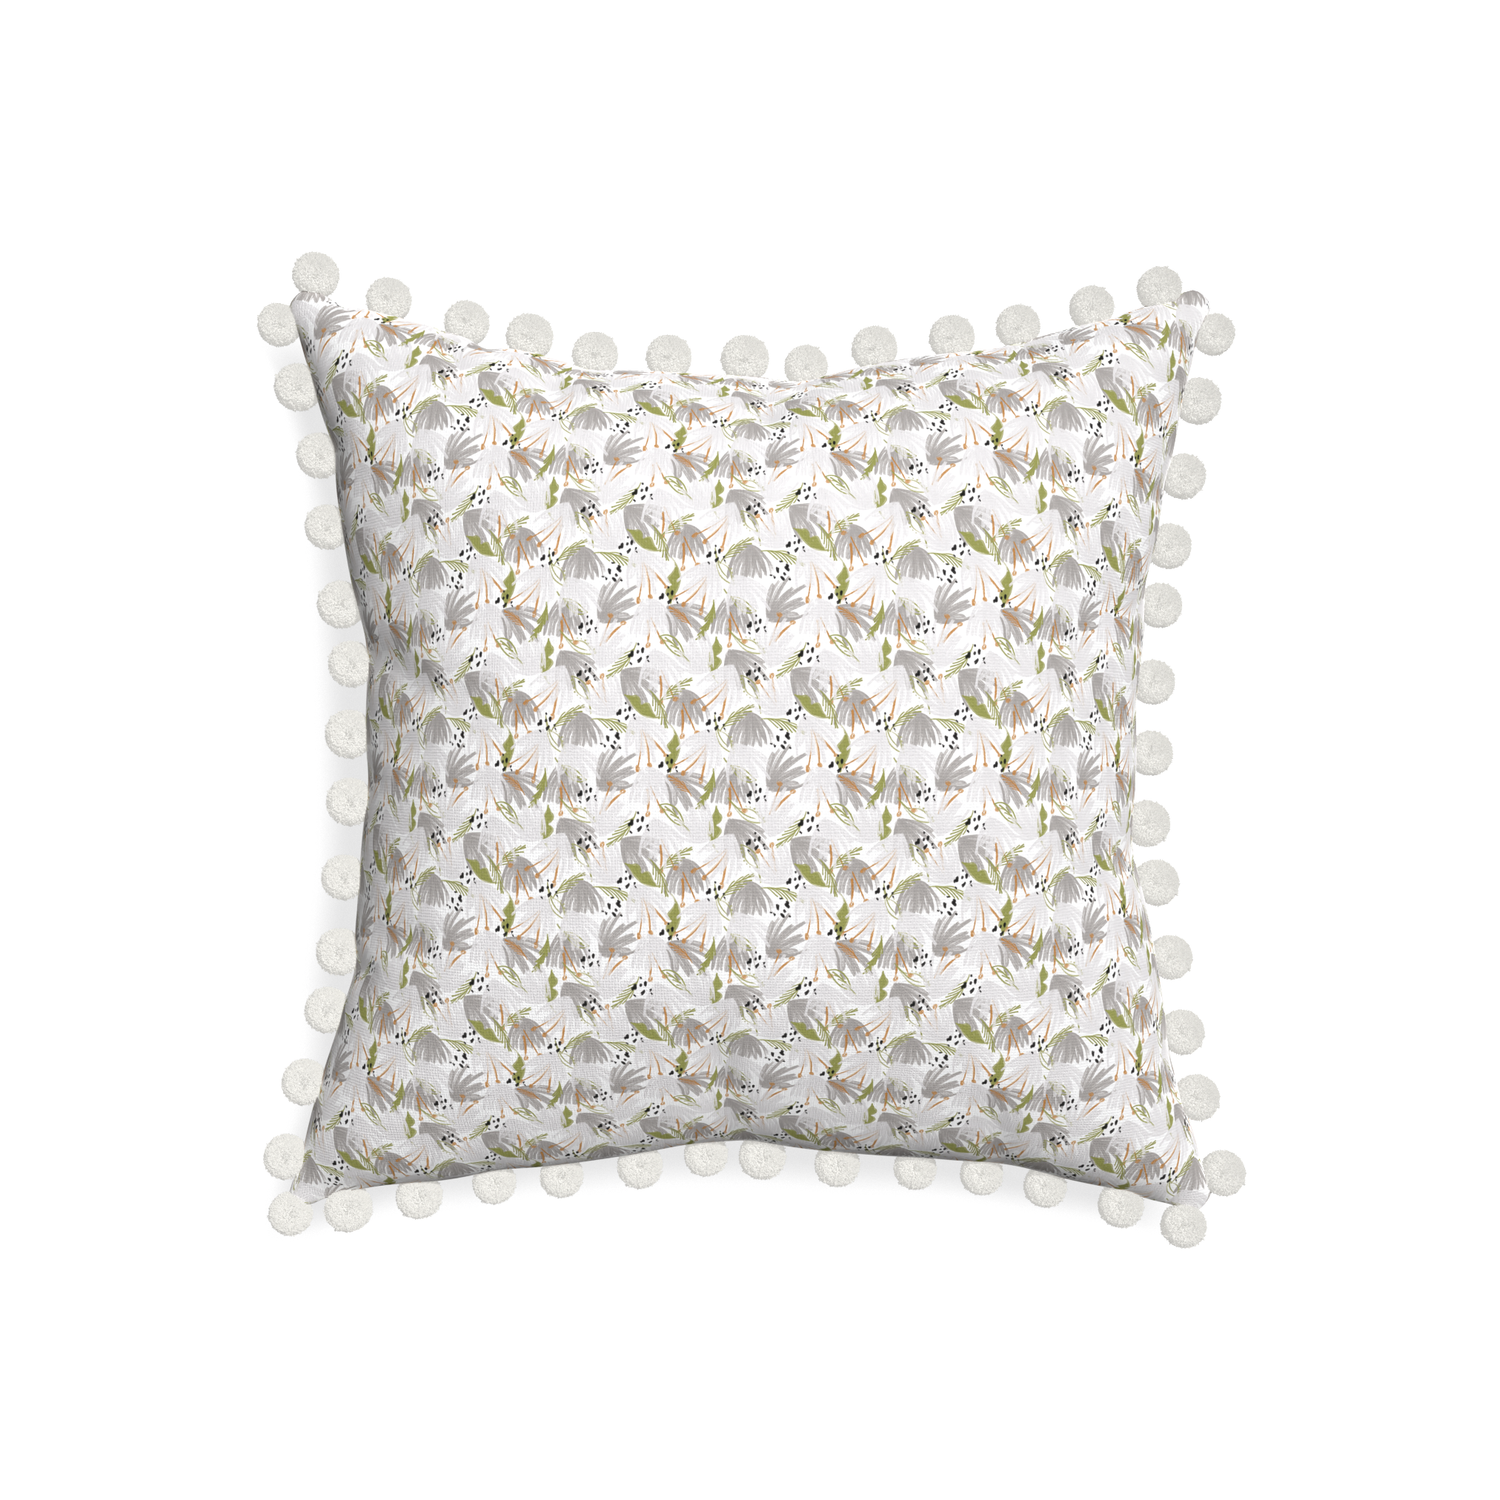 20-square eden grey custom pillow with snow pom pom on white background